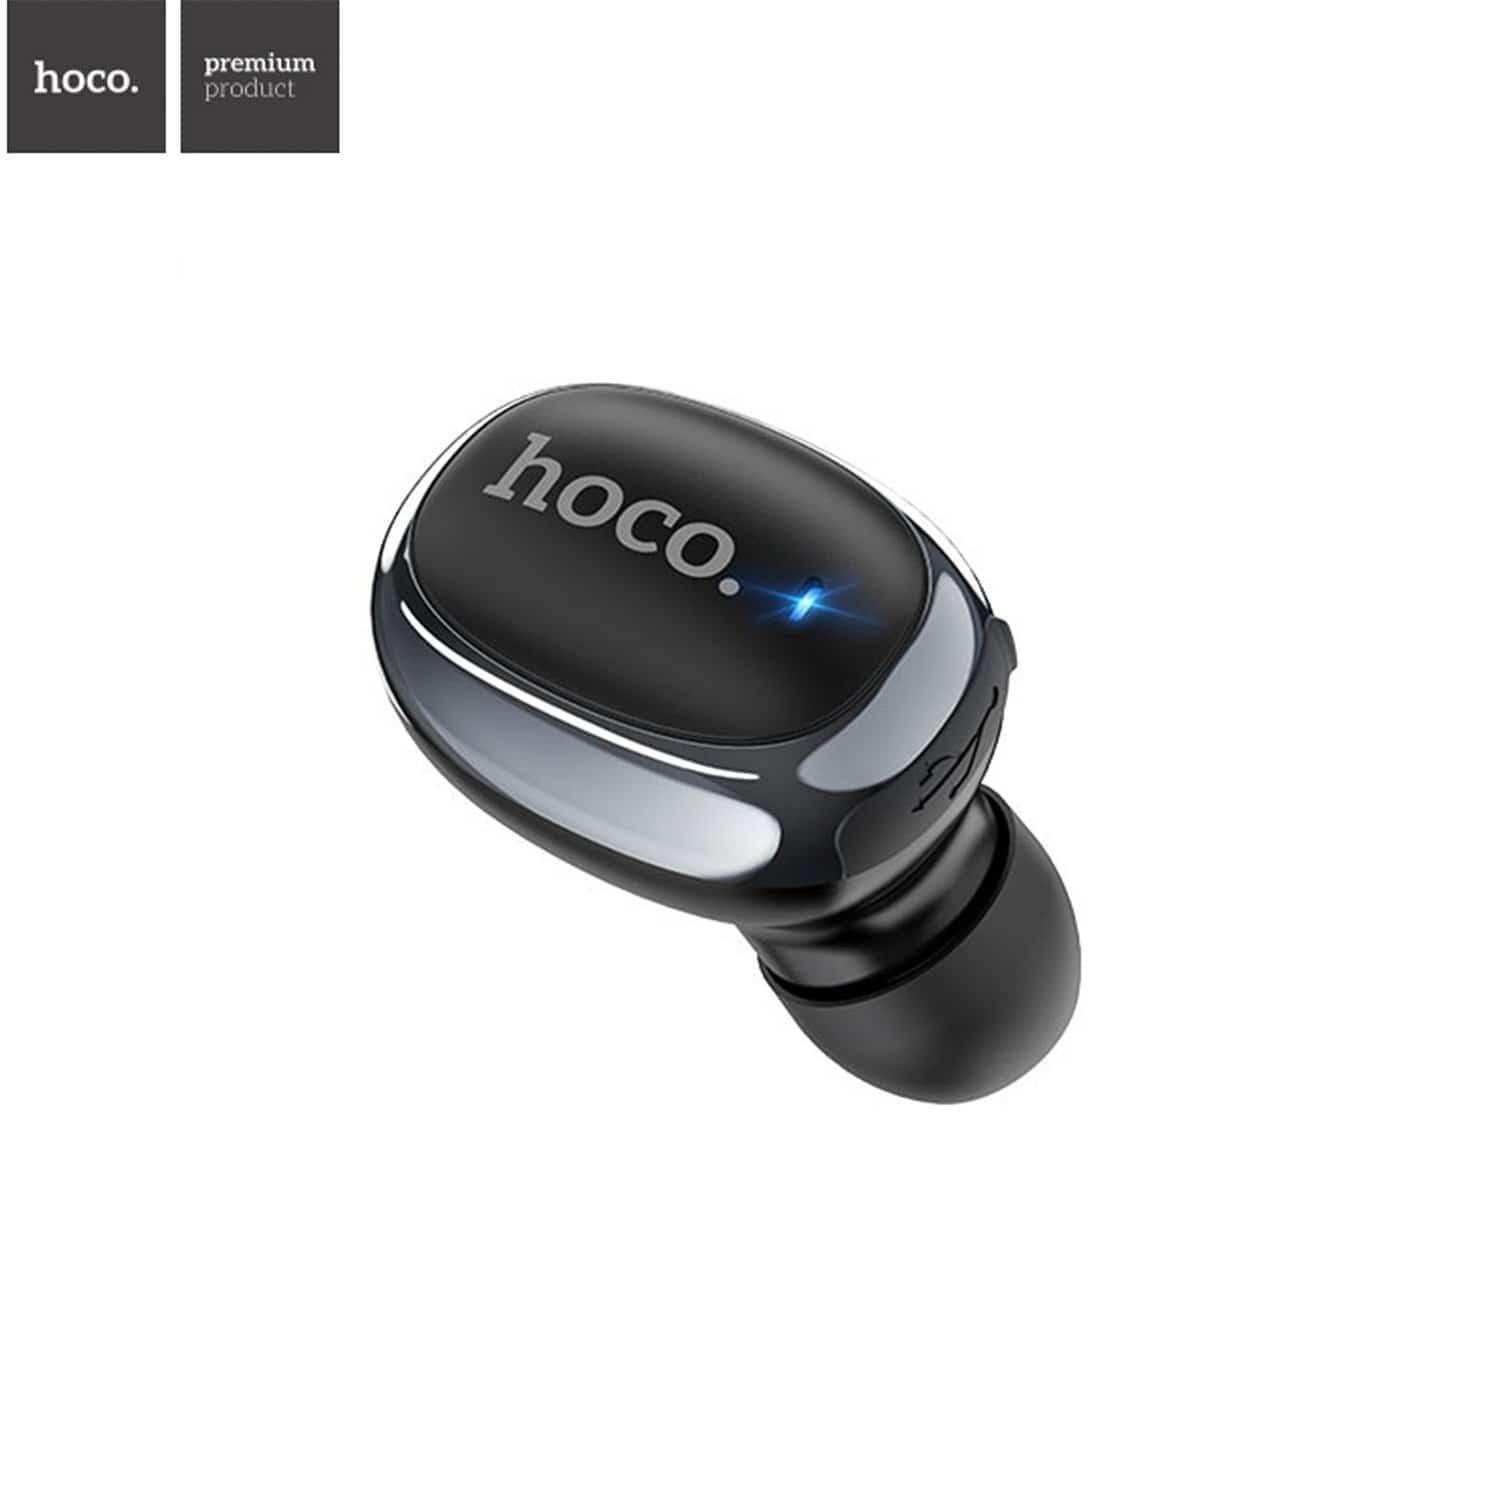 hoco. Wireless headset “E54 Mia mini” earphone with mic | Shopna Online Store .